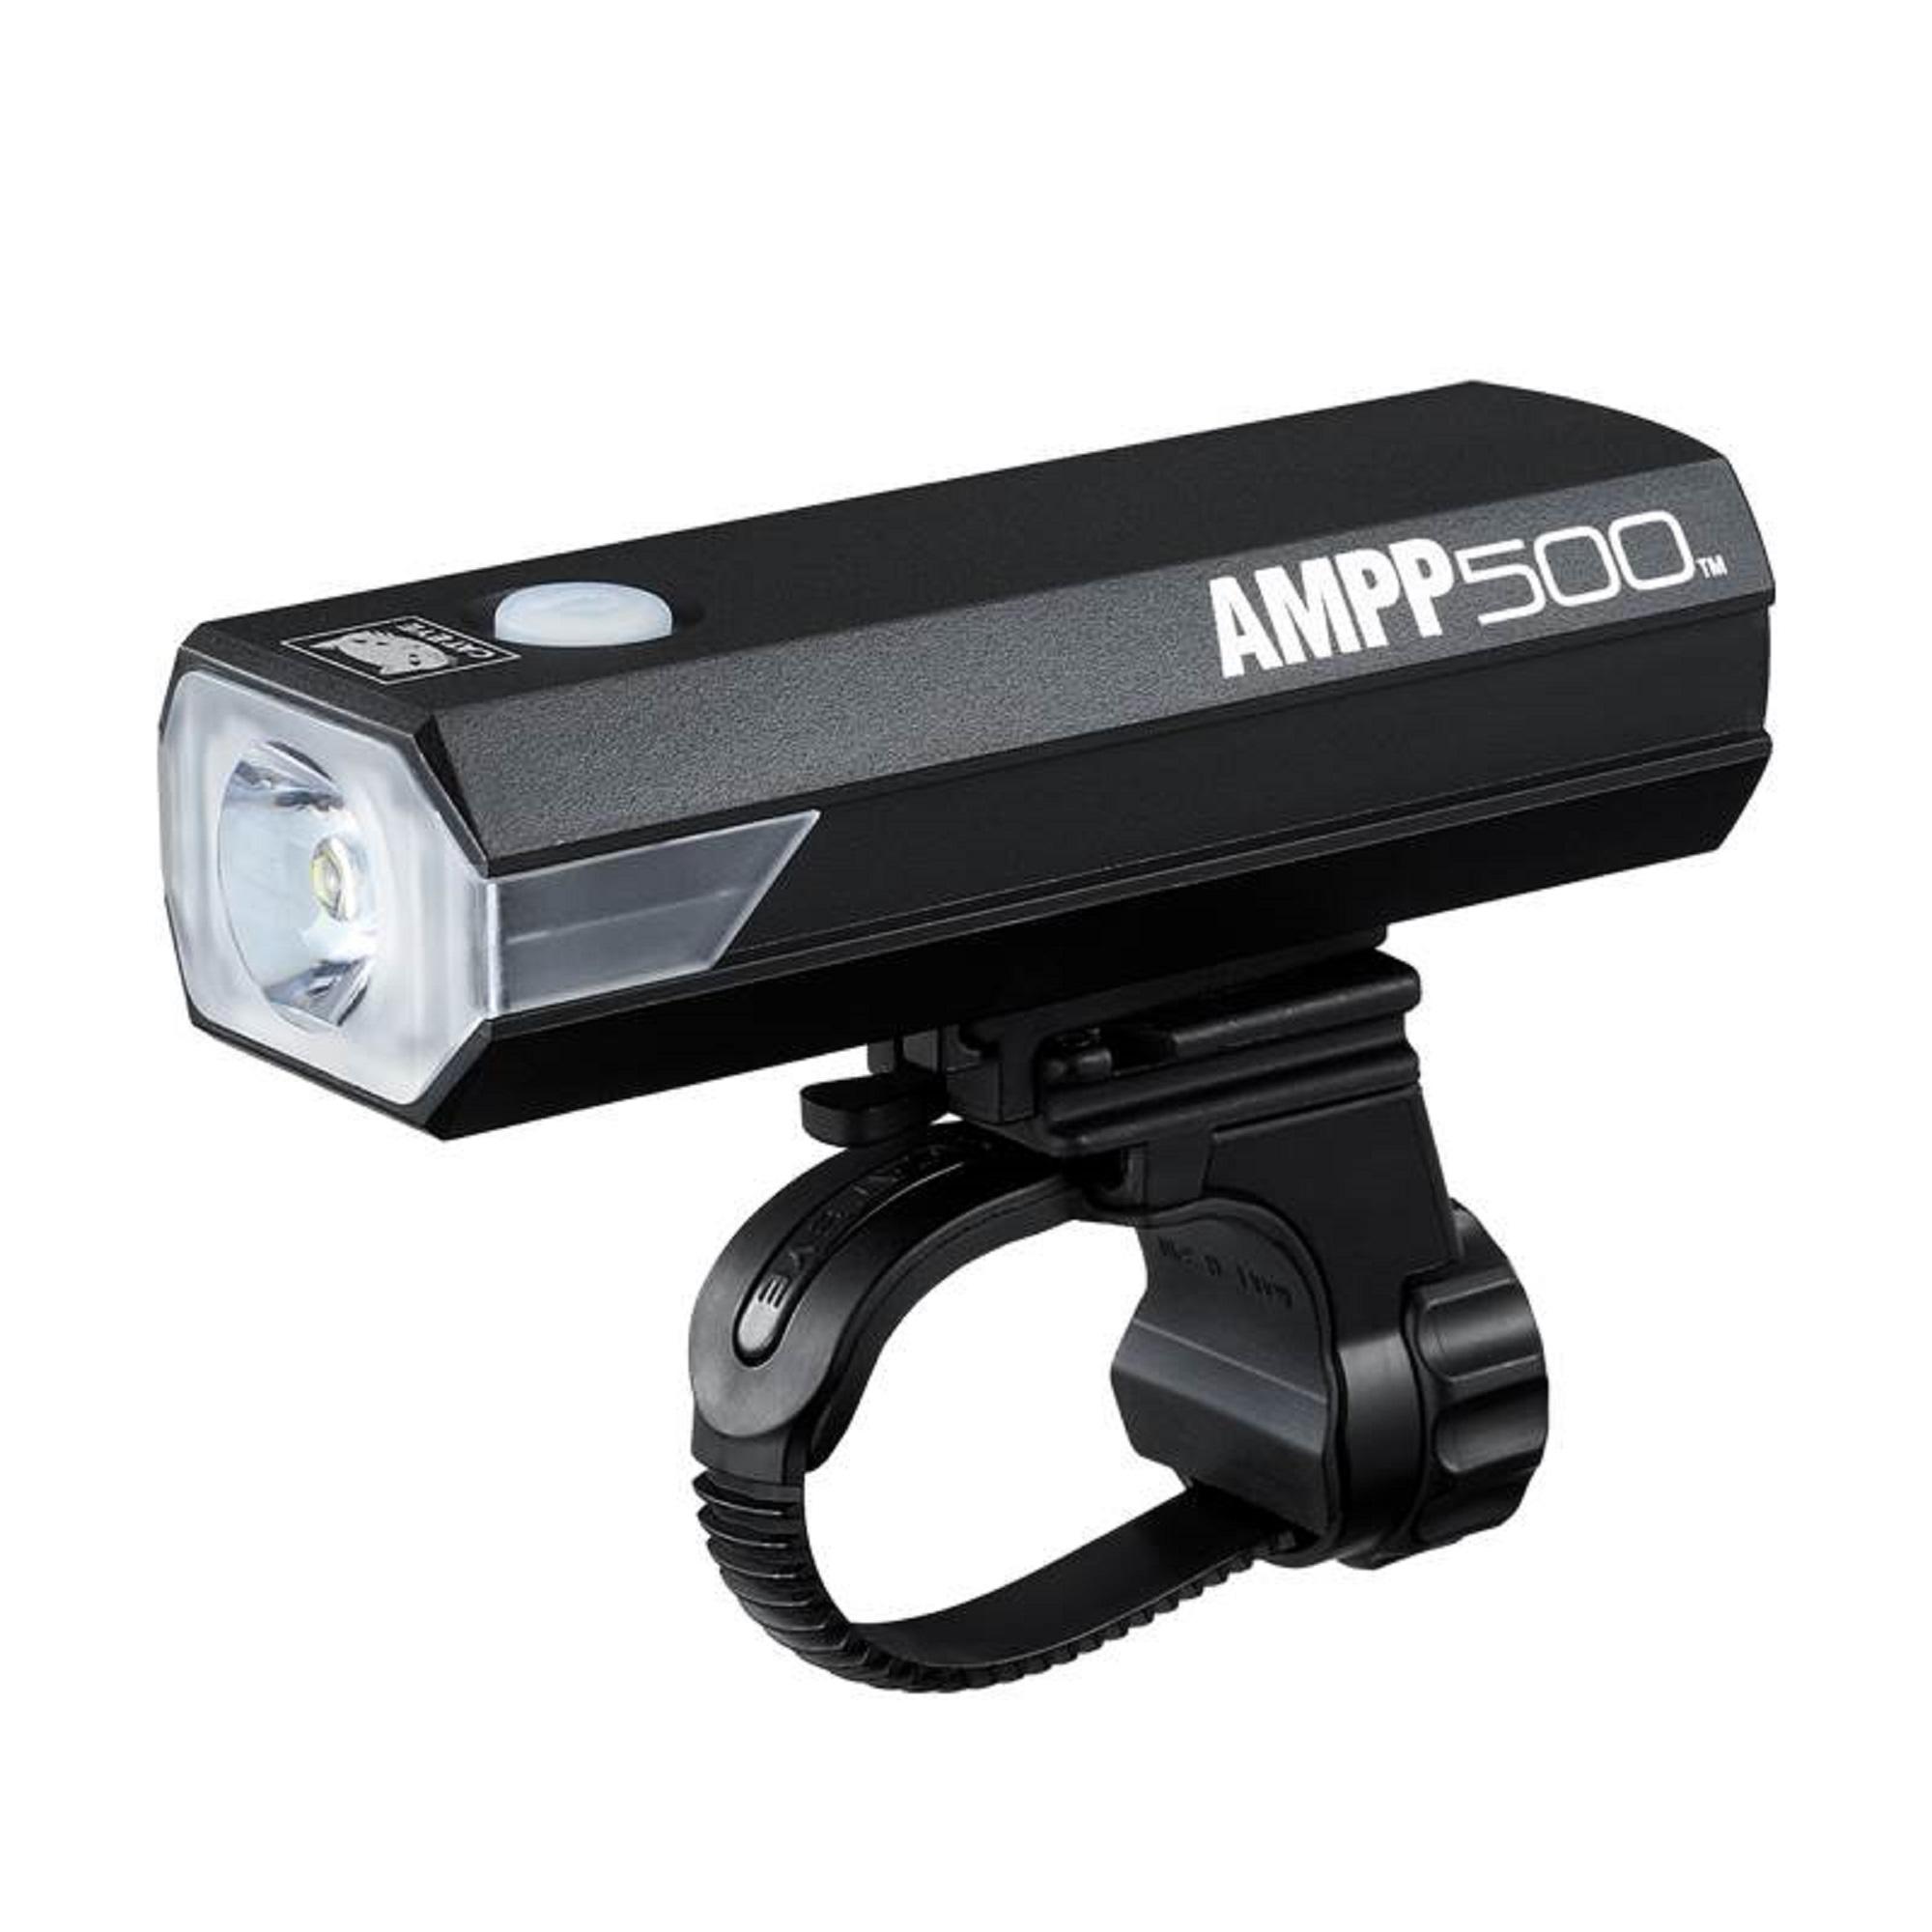 AMPP500 USB Rechargeable Front Bike Light 500 Lumen 1/1